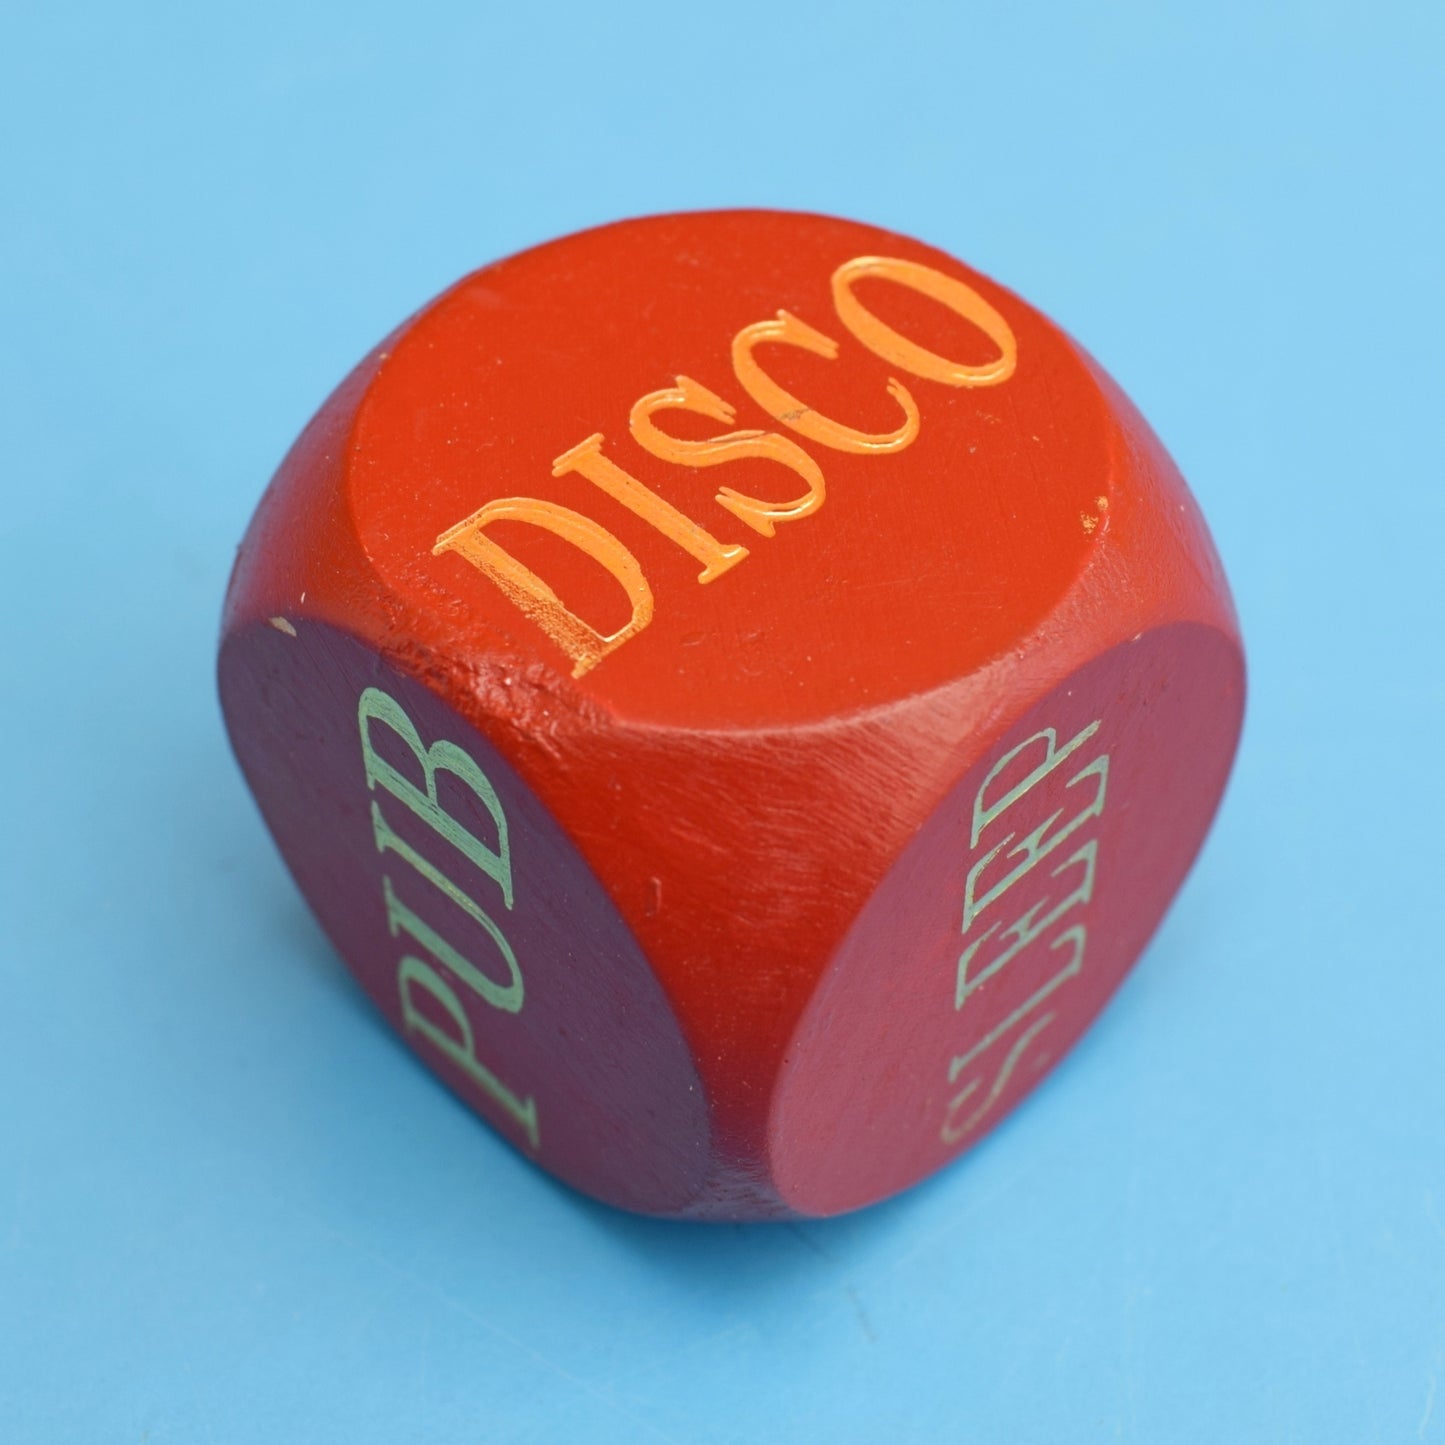 Vintage 1970s Wooden Decision Dice - Disco